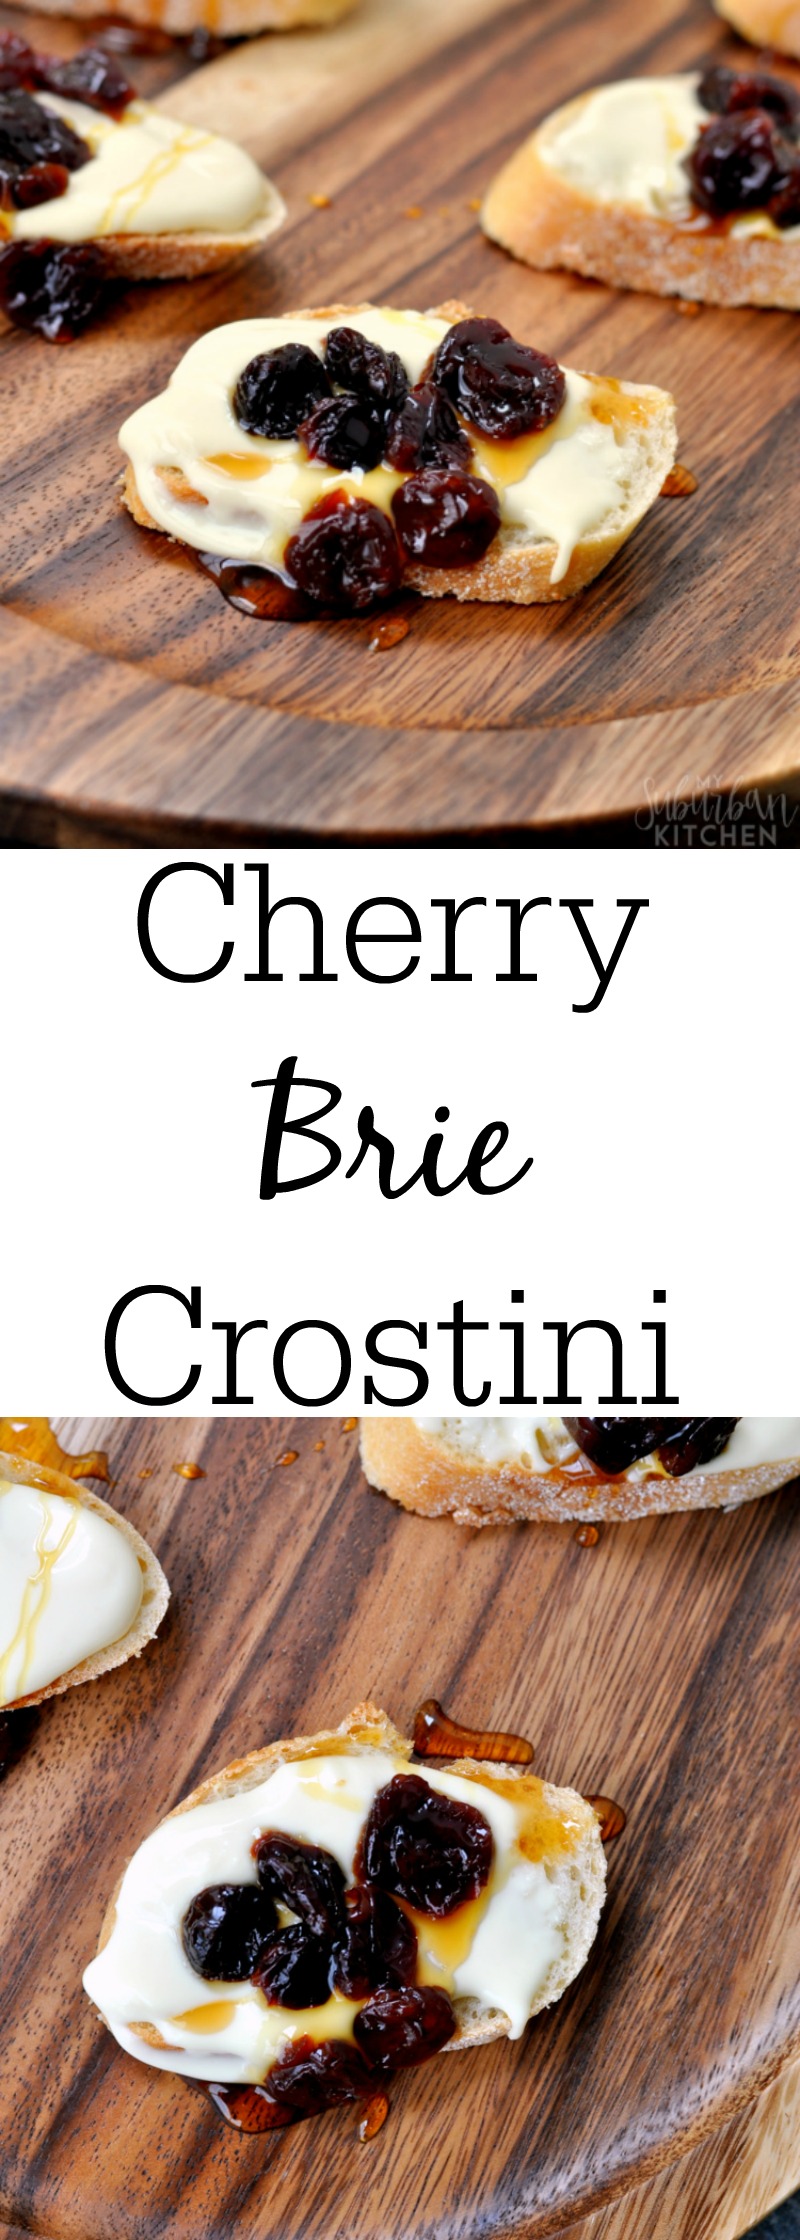 Cherry Brie Crostini